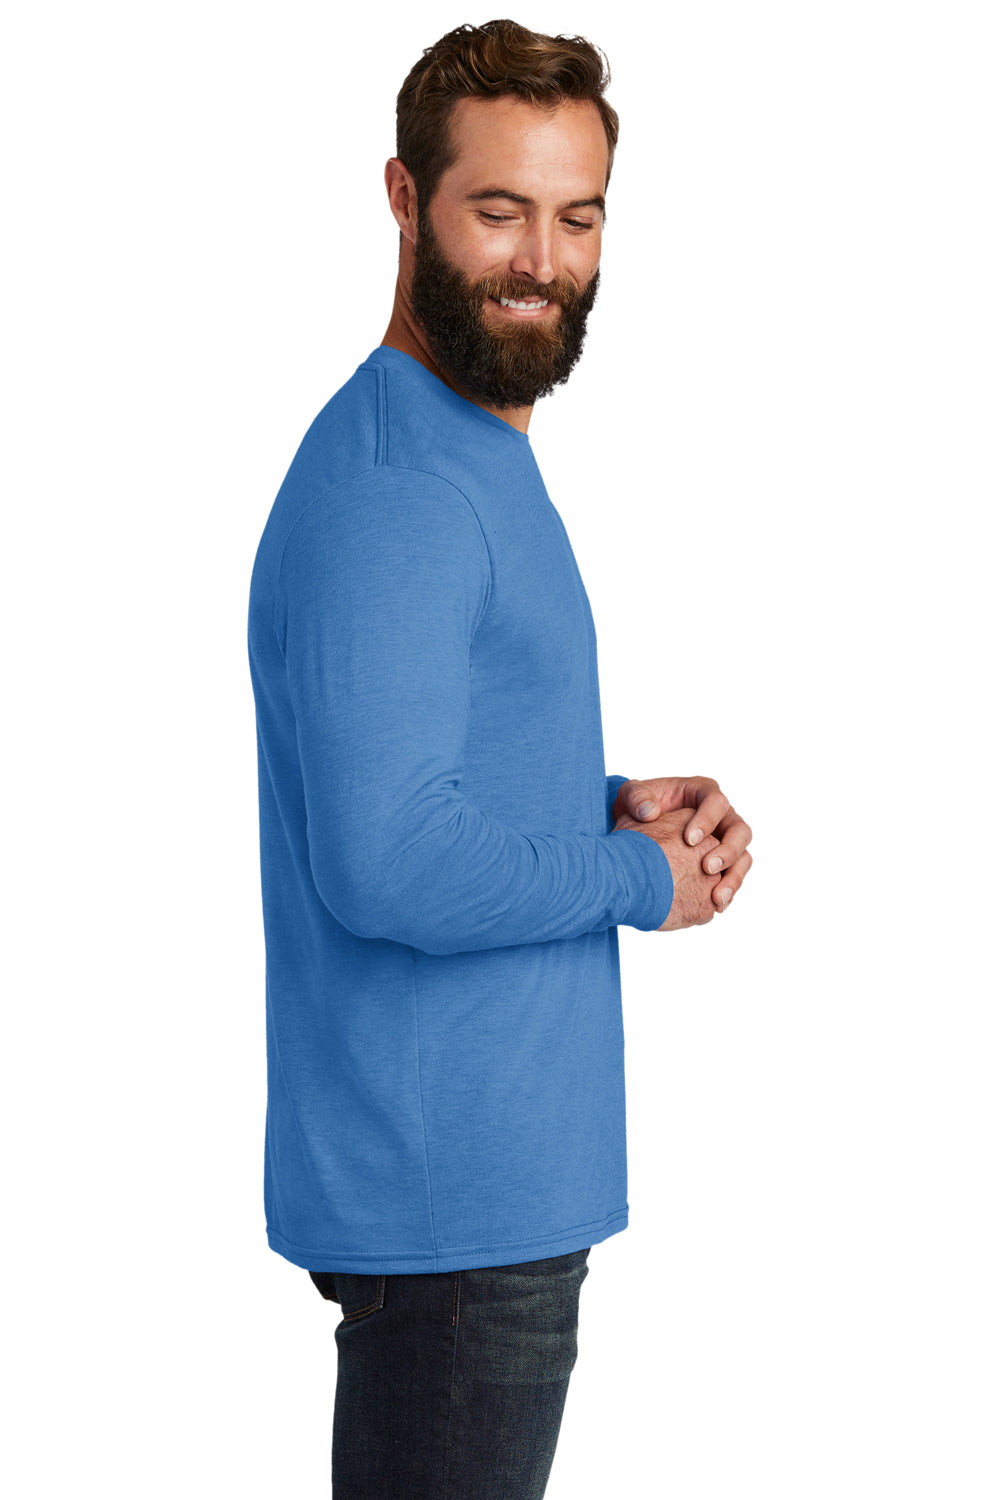 Allmade AL6004 Mens Long Sleeve Crewneck T-Shirt Azure Blue Model Side